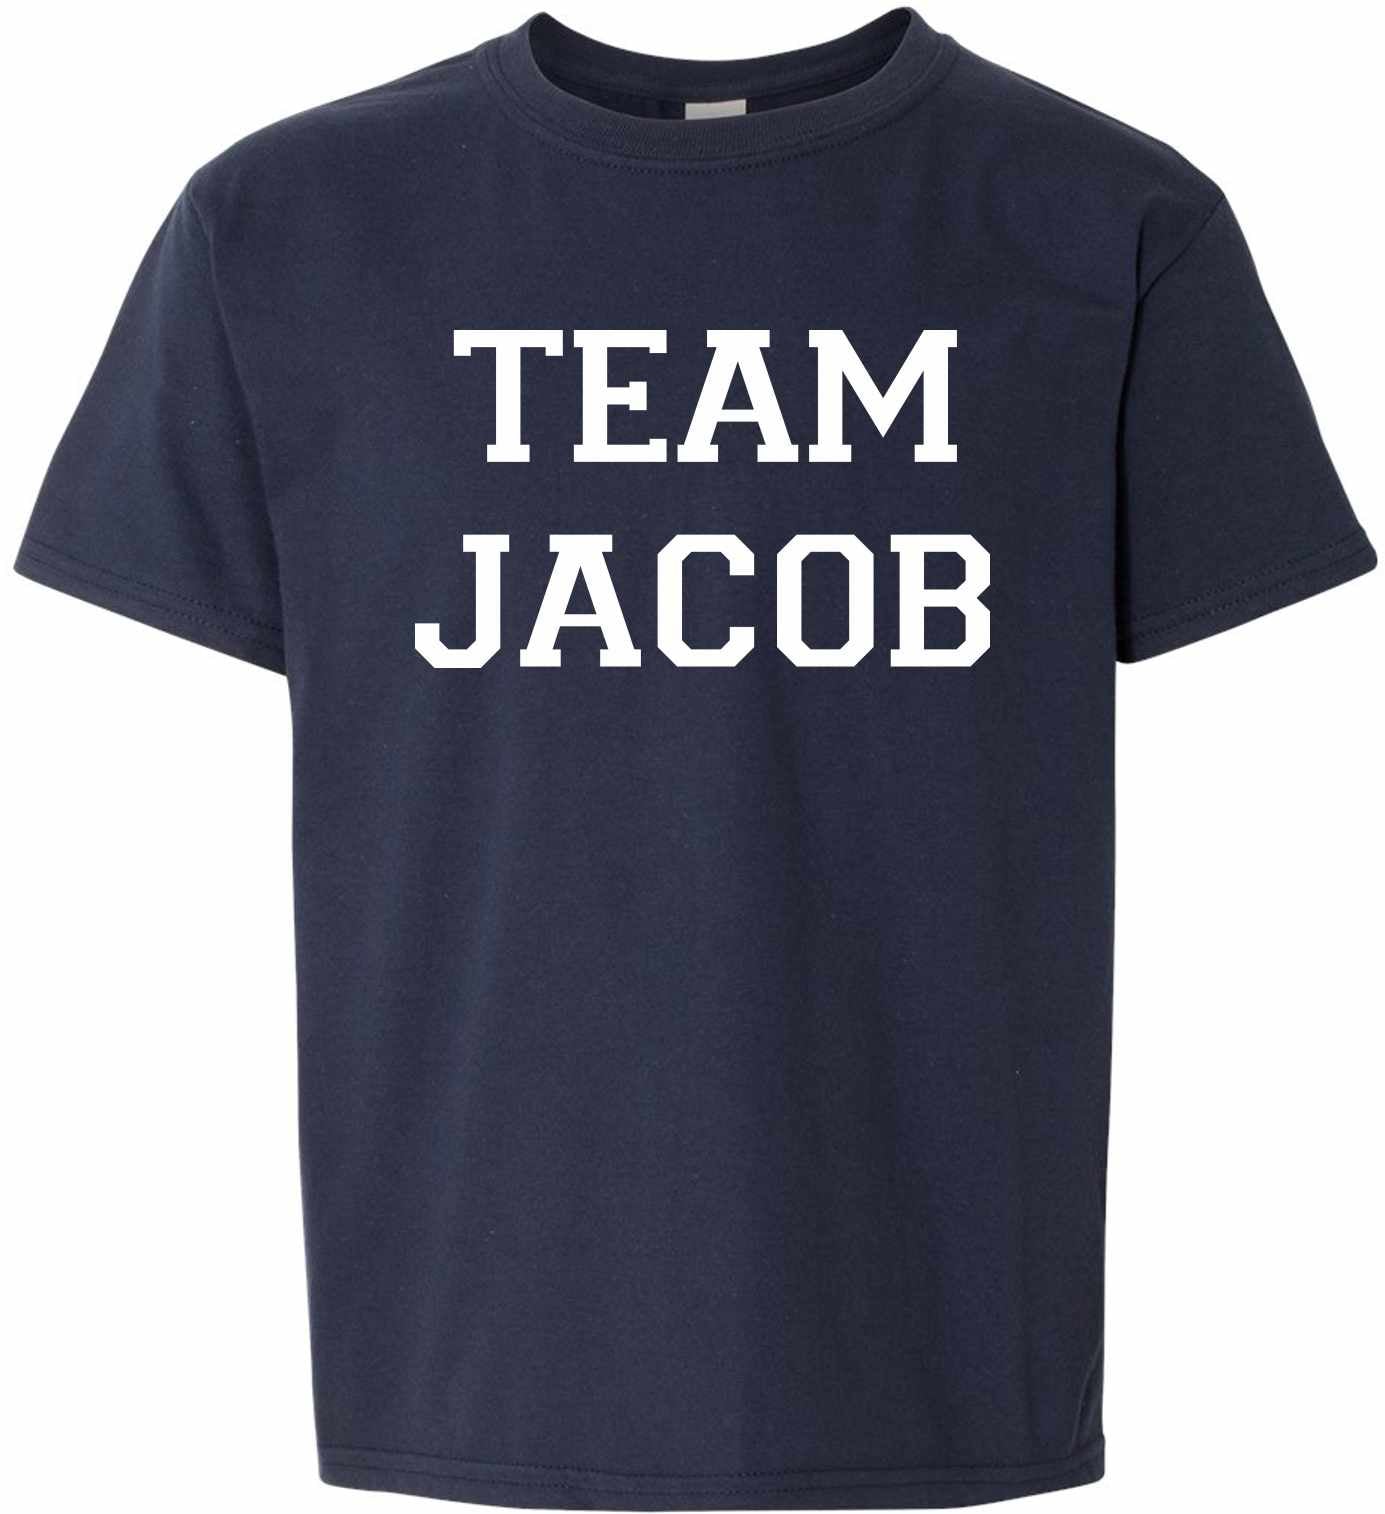 TEAM JACOB on Kids T-Shirt (#249-201)